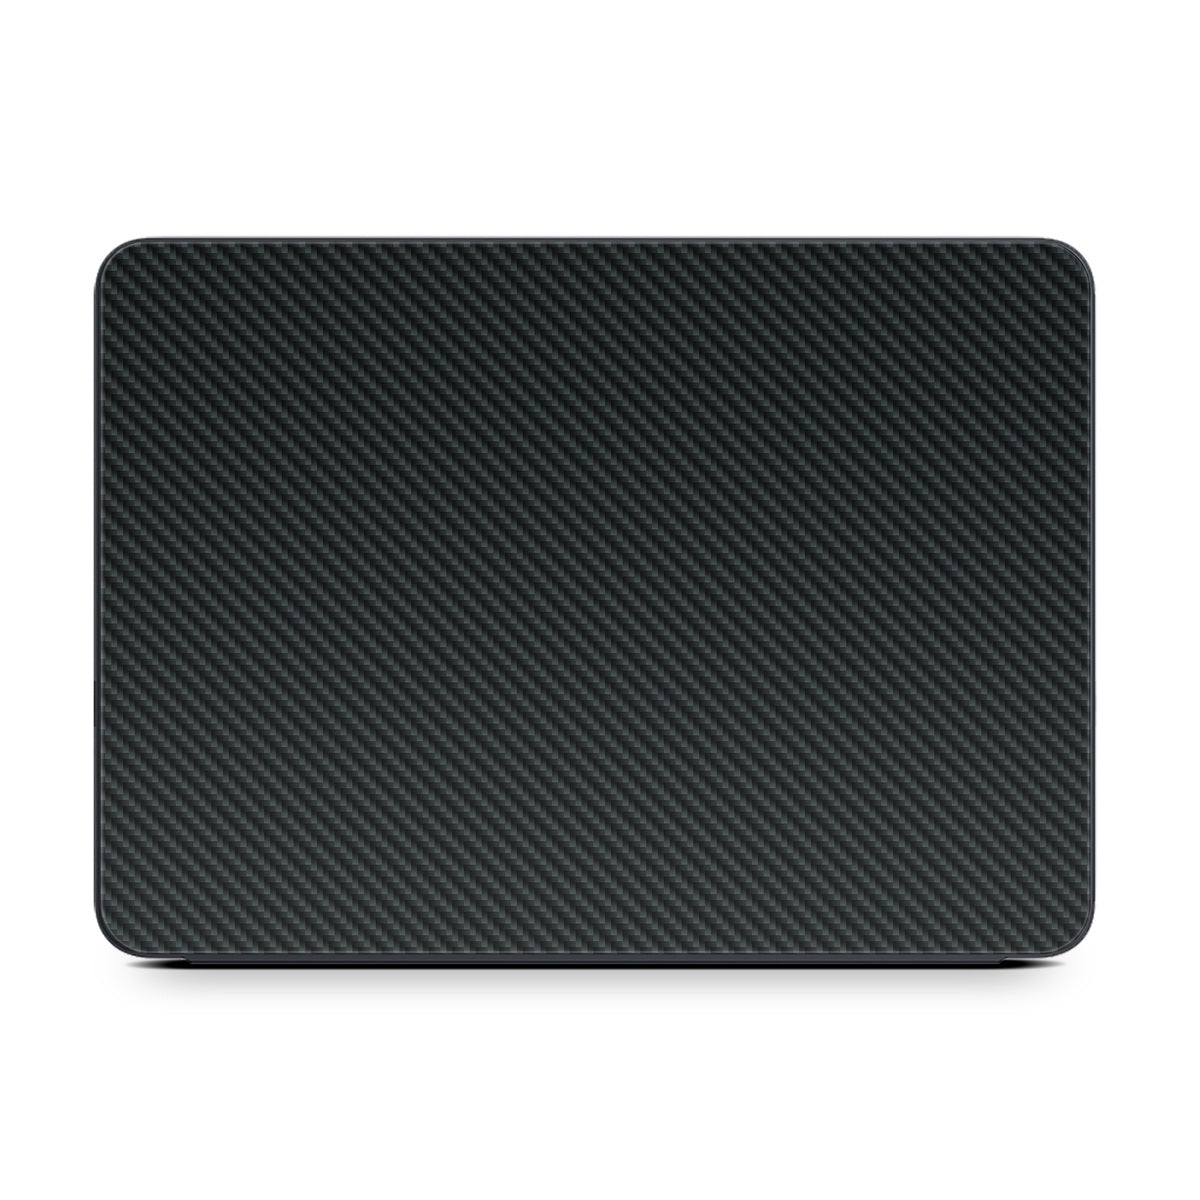 Carbon - Apple Smart Keyboard Folio Skin